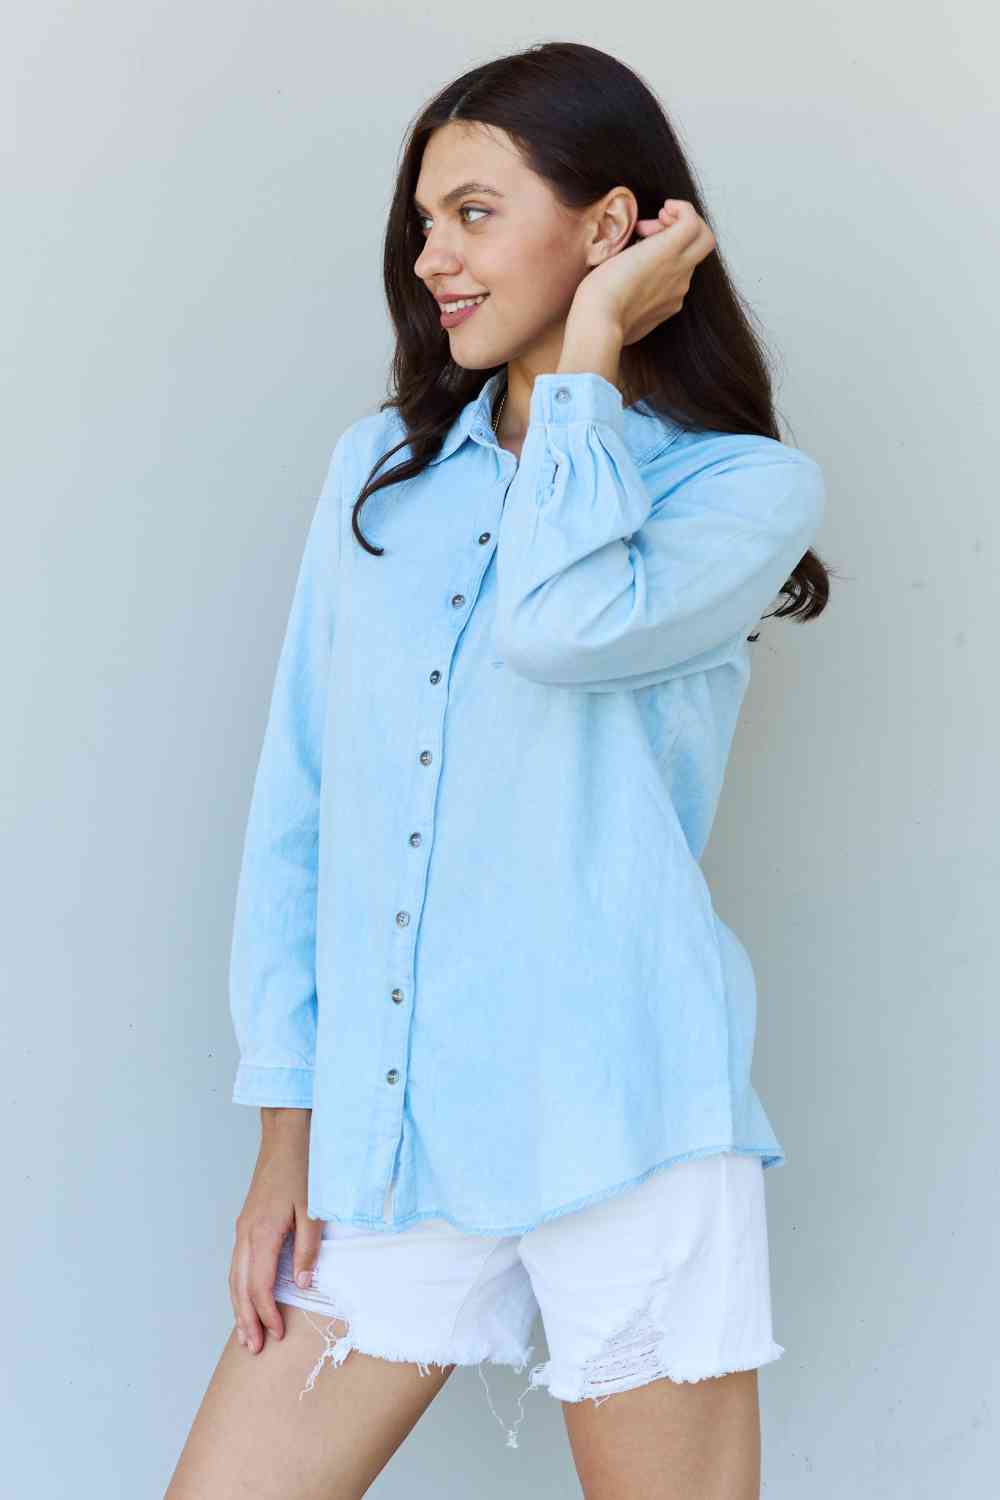 Doublju Blue Jean Baby Denim Button Down Shirt Top in Light Blue - AFFORDABLE MARKET